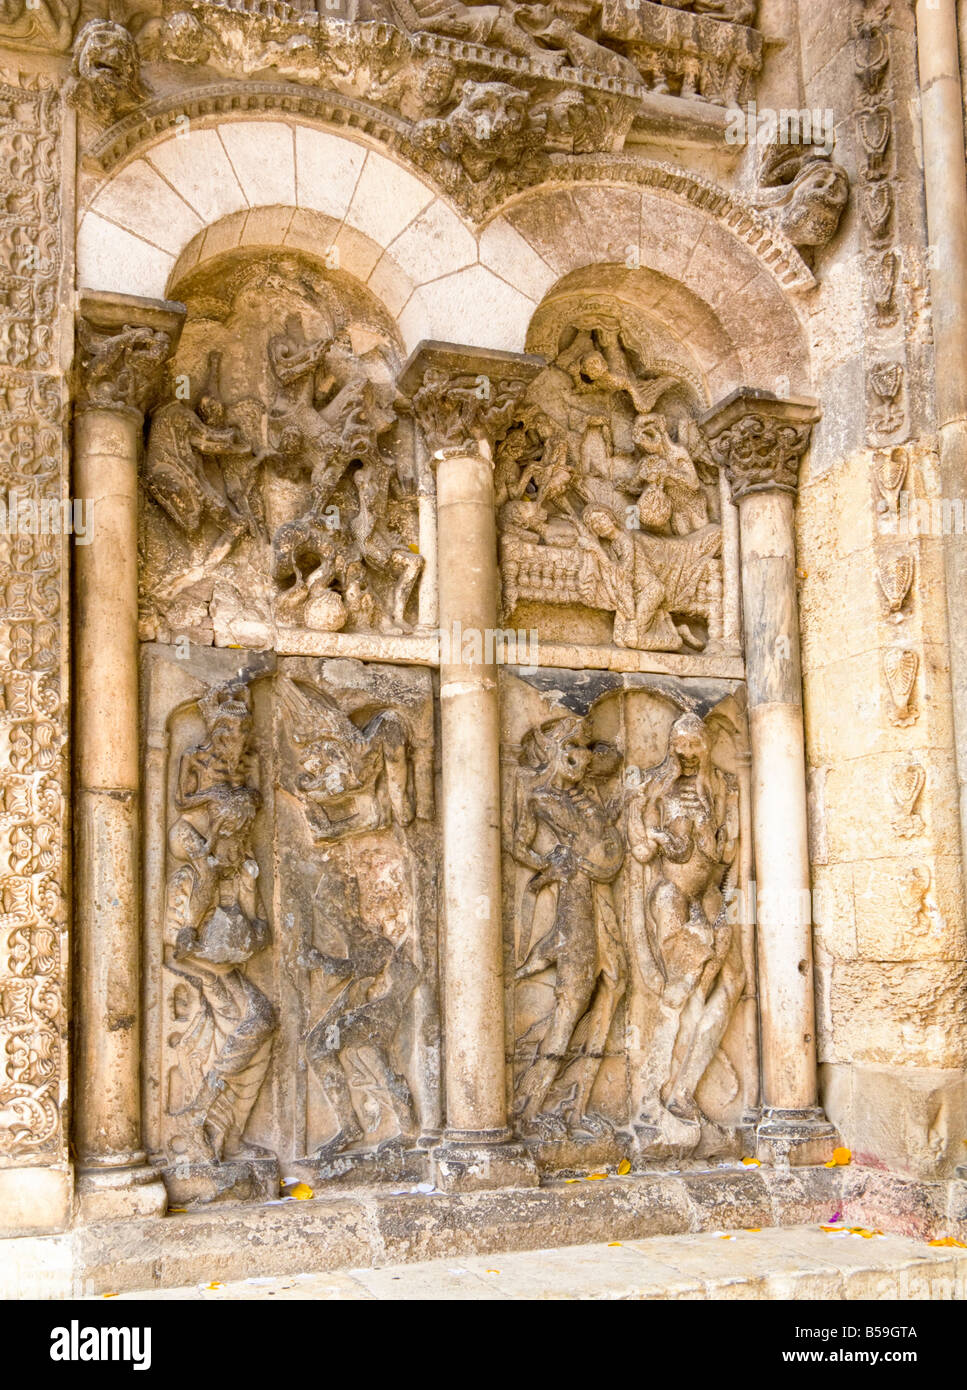 Relief sculptures at the entrance to the Abbaye Saint Pierre de Moissac, in Moissac, Tarn et Garonne, France, Europe Stock Photo